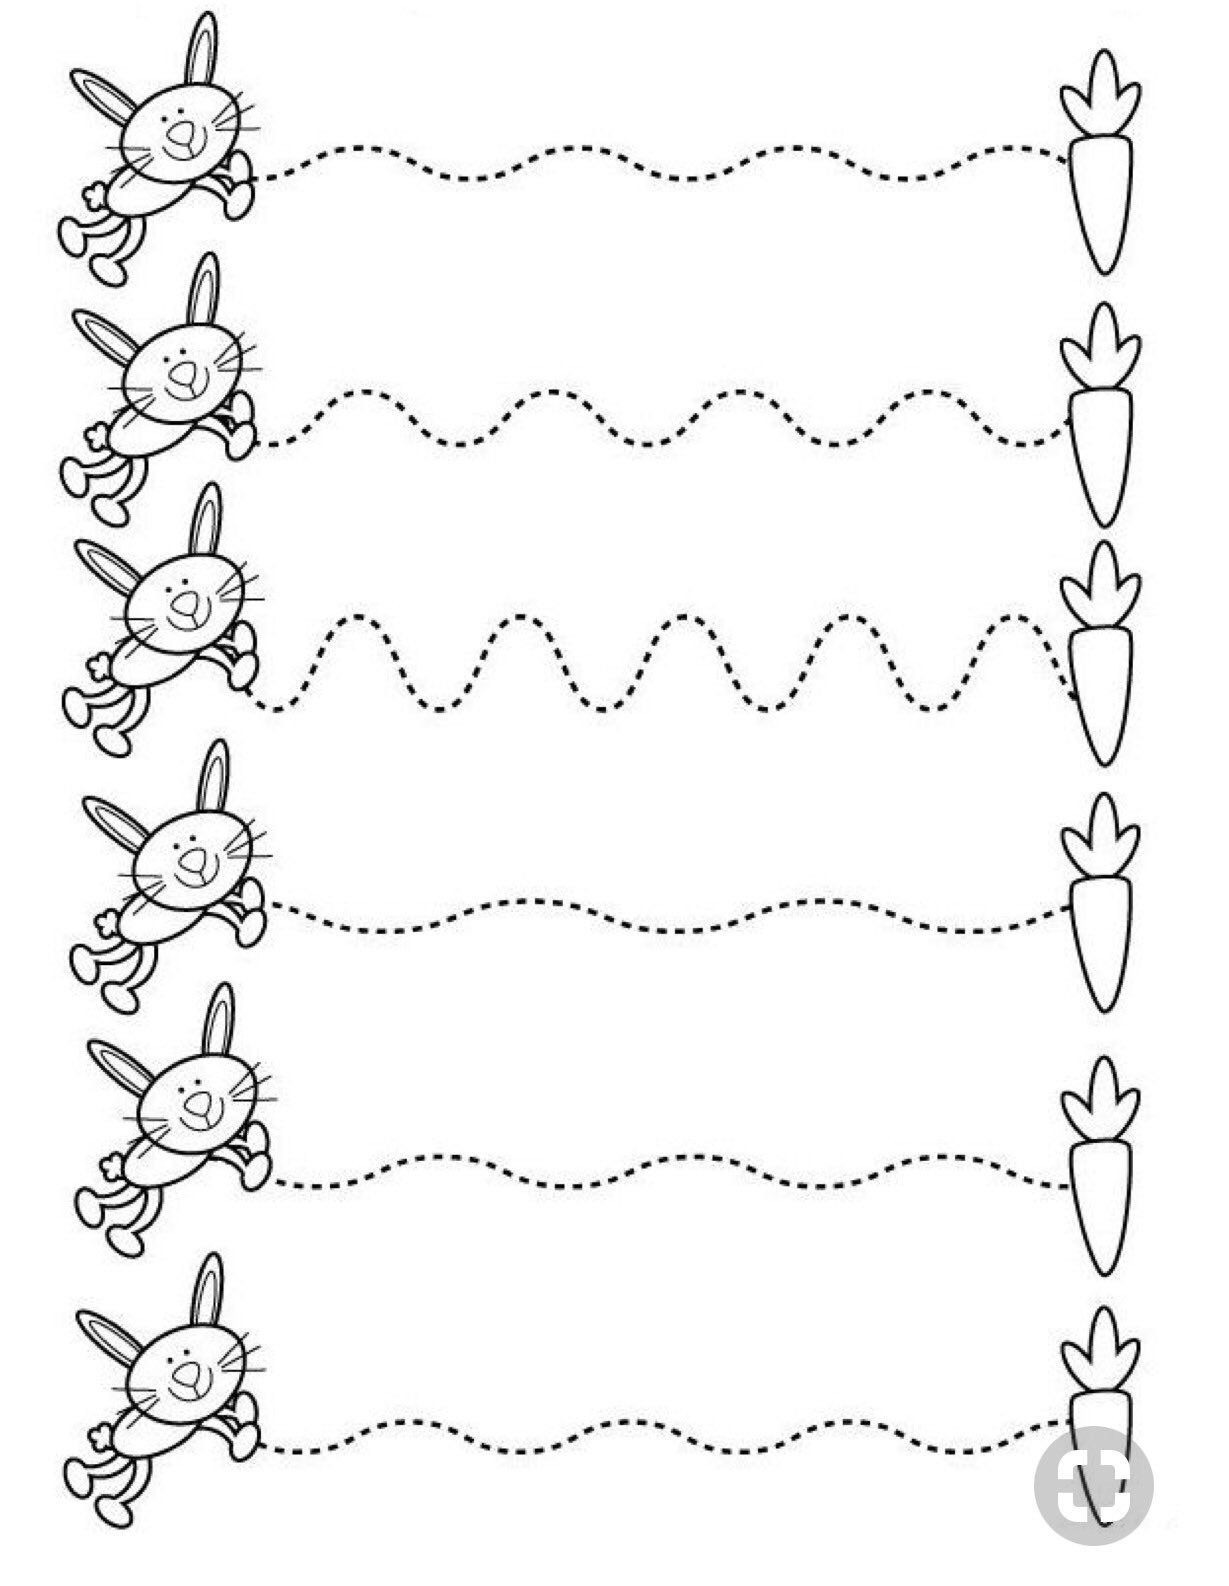 tracing-lines-worksheets-for-preschool-pdf-keatonmeyers-simple